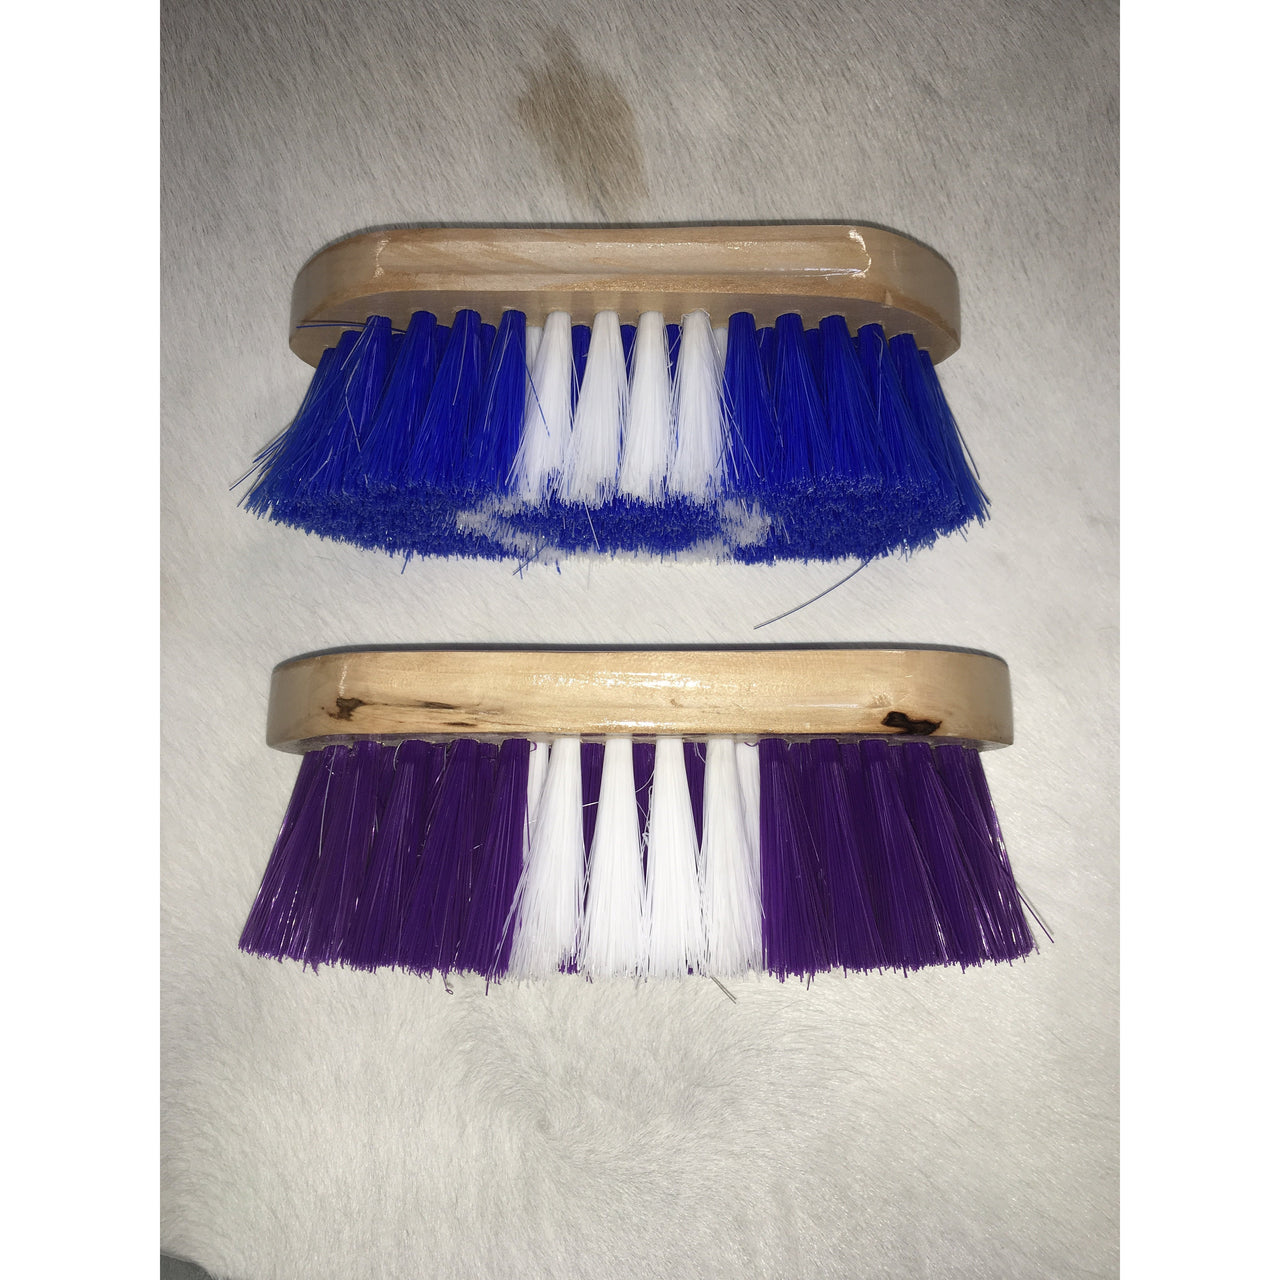 Irvine Multi Colour Brush 6 1/2" x 2 1/2" Wood Handle w/2" Soft Nylon Bristles